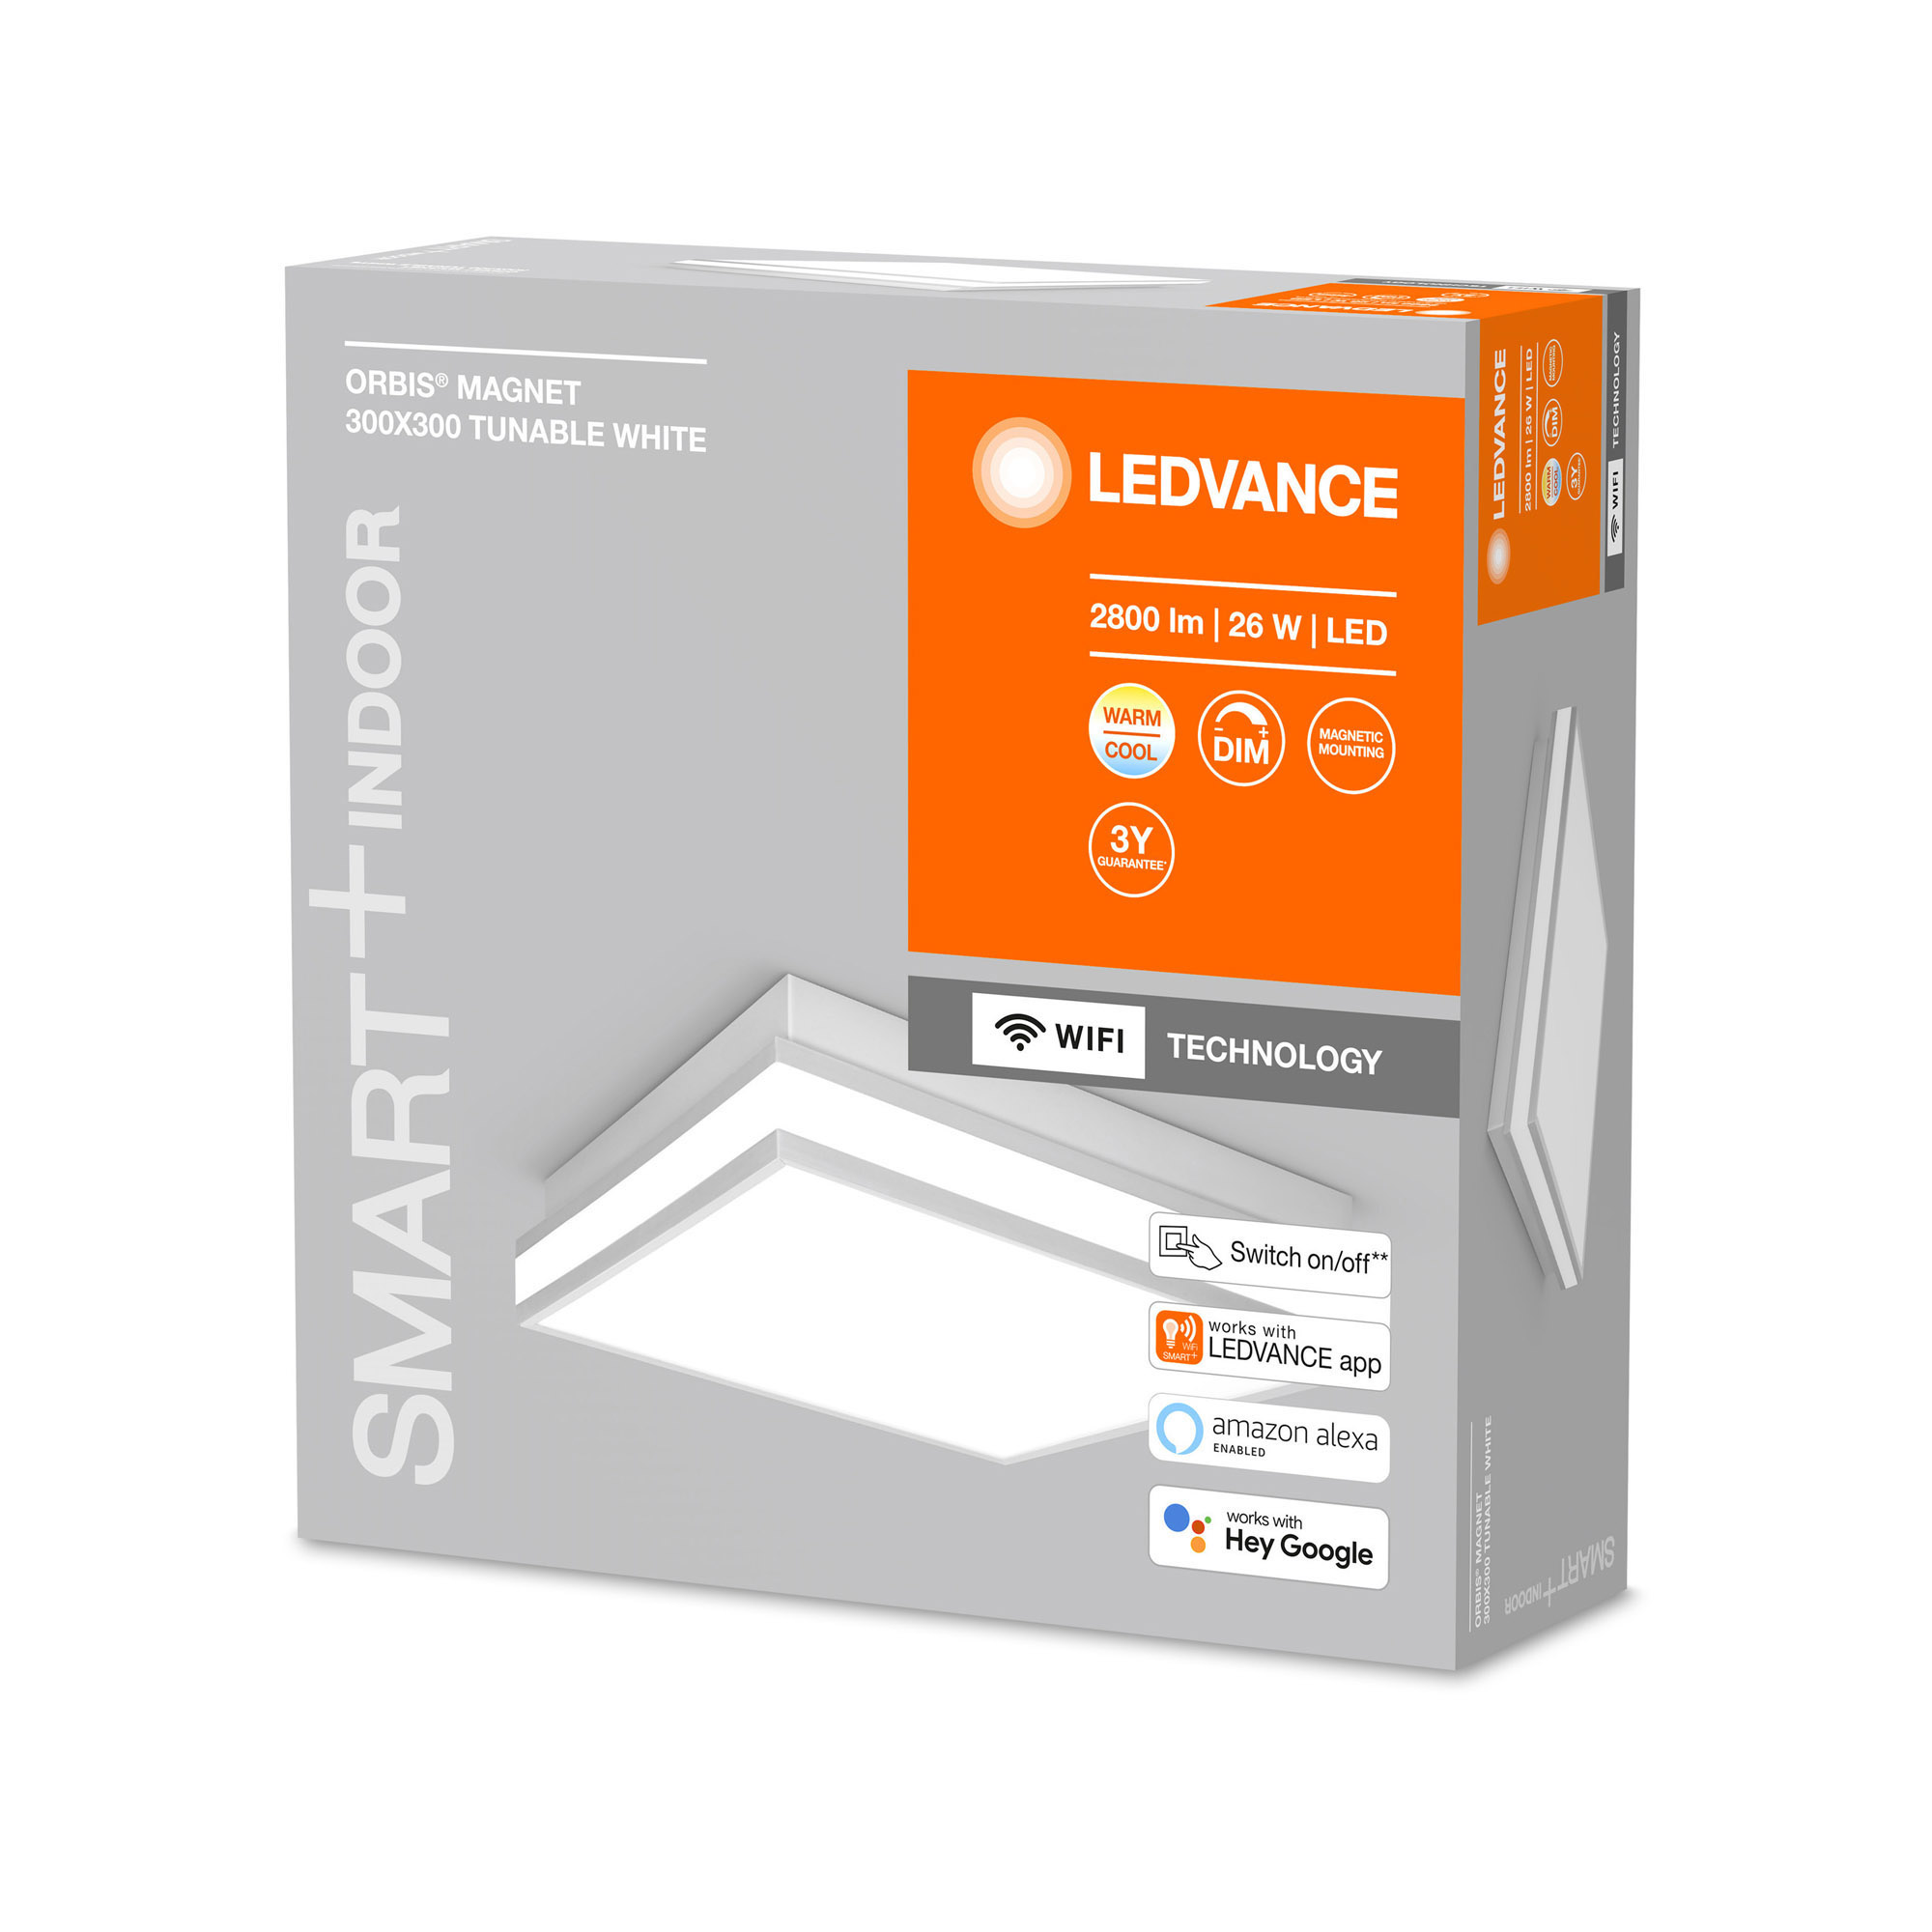 LEDVANCE SMART+ WiFi Tunable White LED Ceiling Light ORBIS MAGNET 300x300mm grey 2500lm